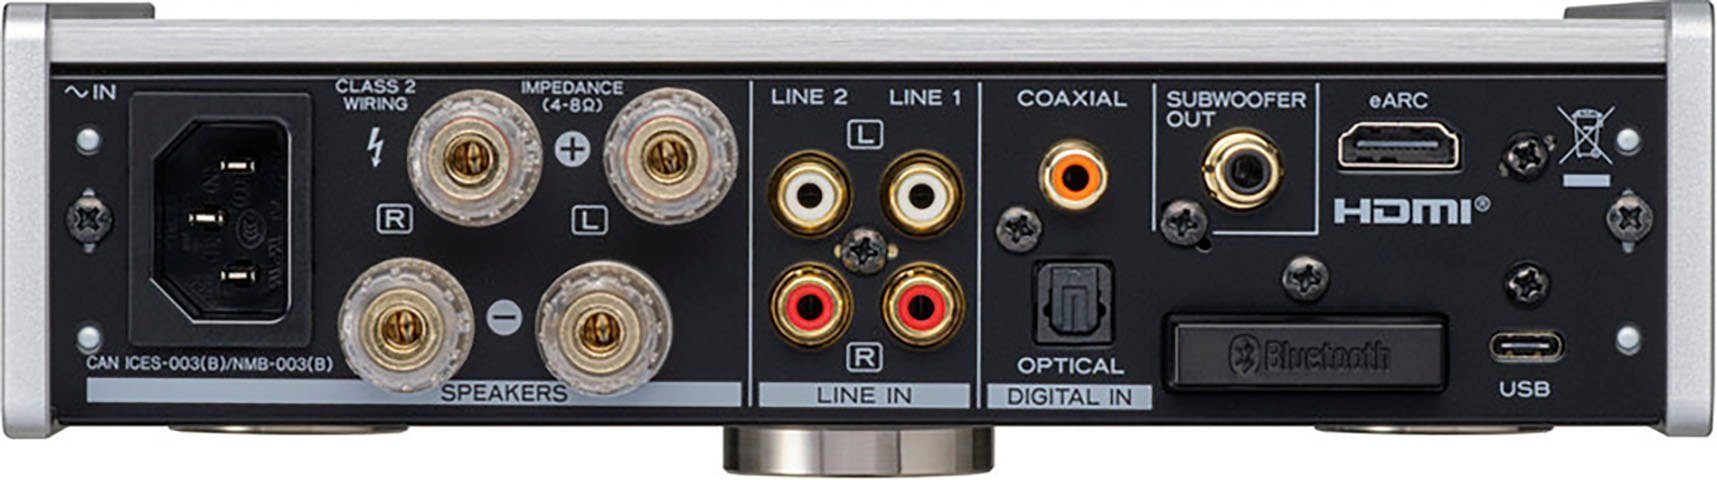 AI-303 TEAC (Anzahl W) 100 silberfarben DAC USB Audioverstärker Kanäle: 2,